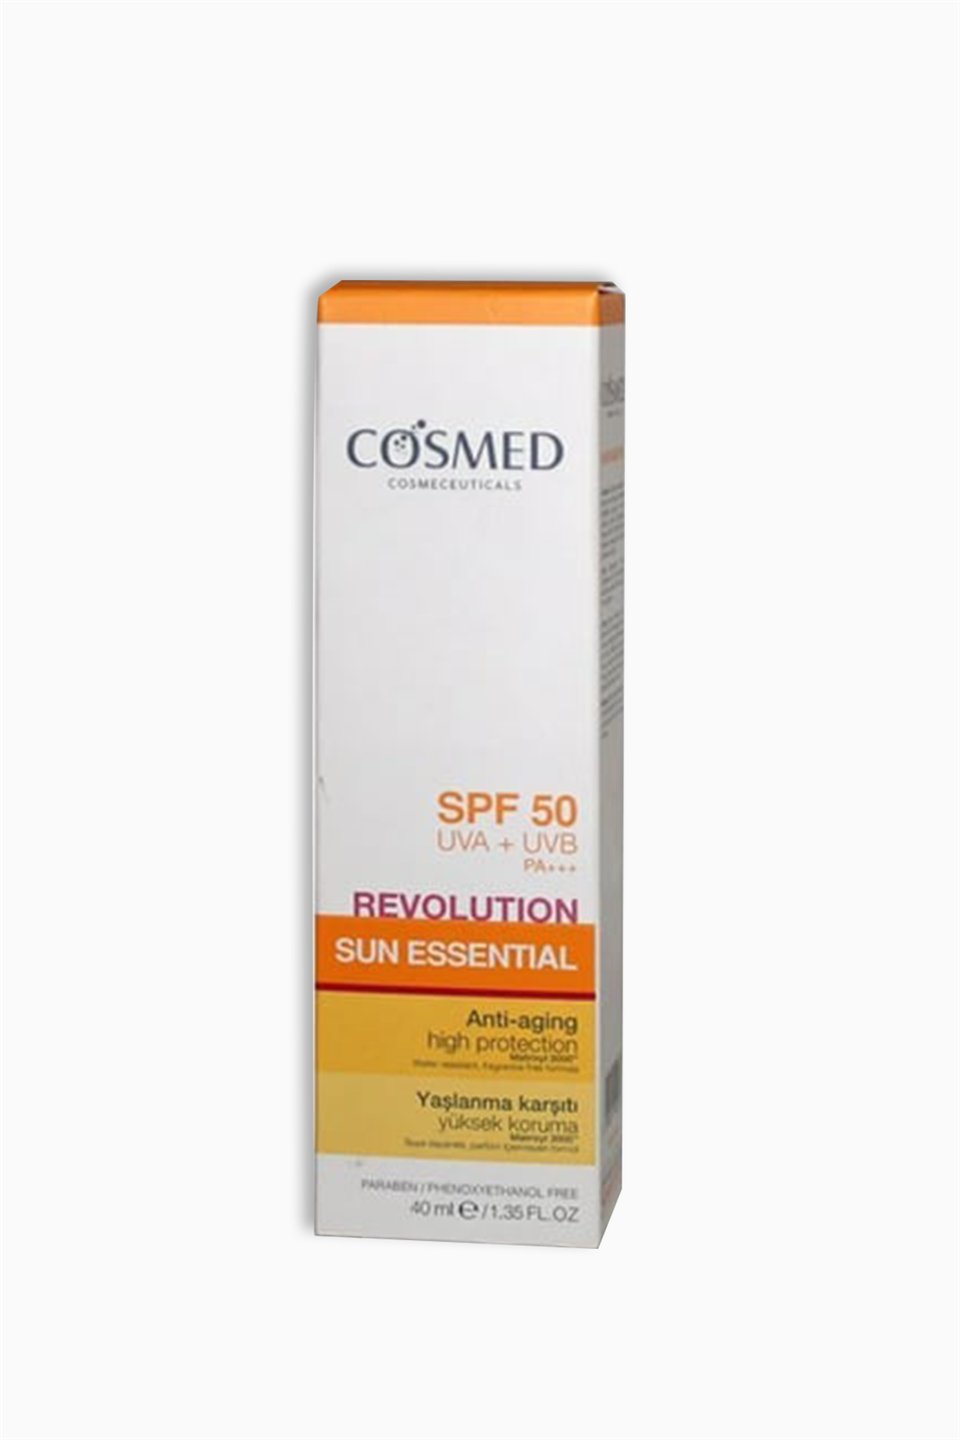 Cosmed Revolution Sun Essential Yaşlanma Karşıtı Yüksek Koruma Güneş Kremi  Spf50 40 Ml Fiyatı | Farmakozmetika